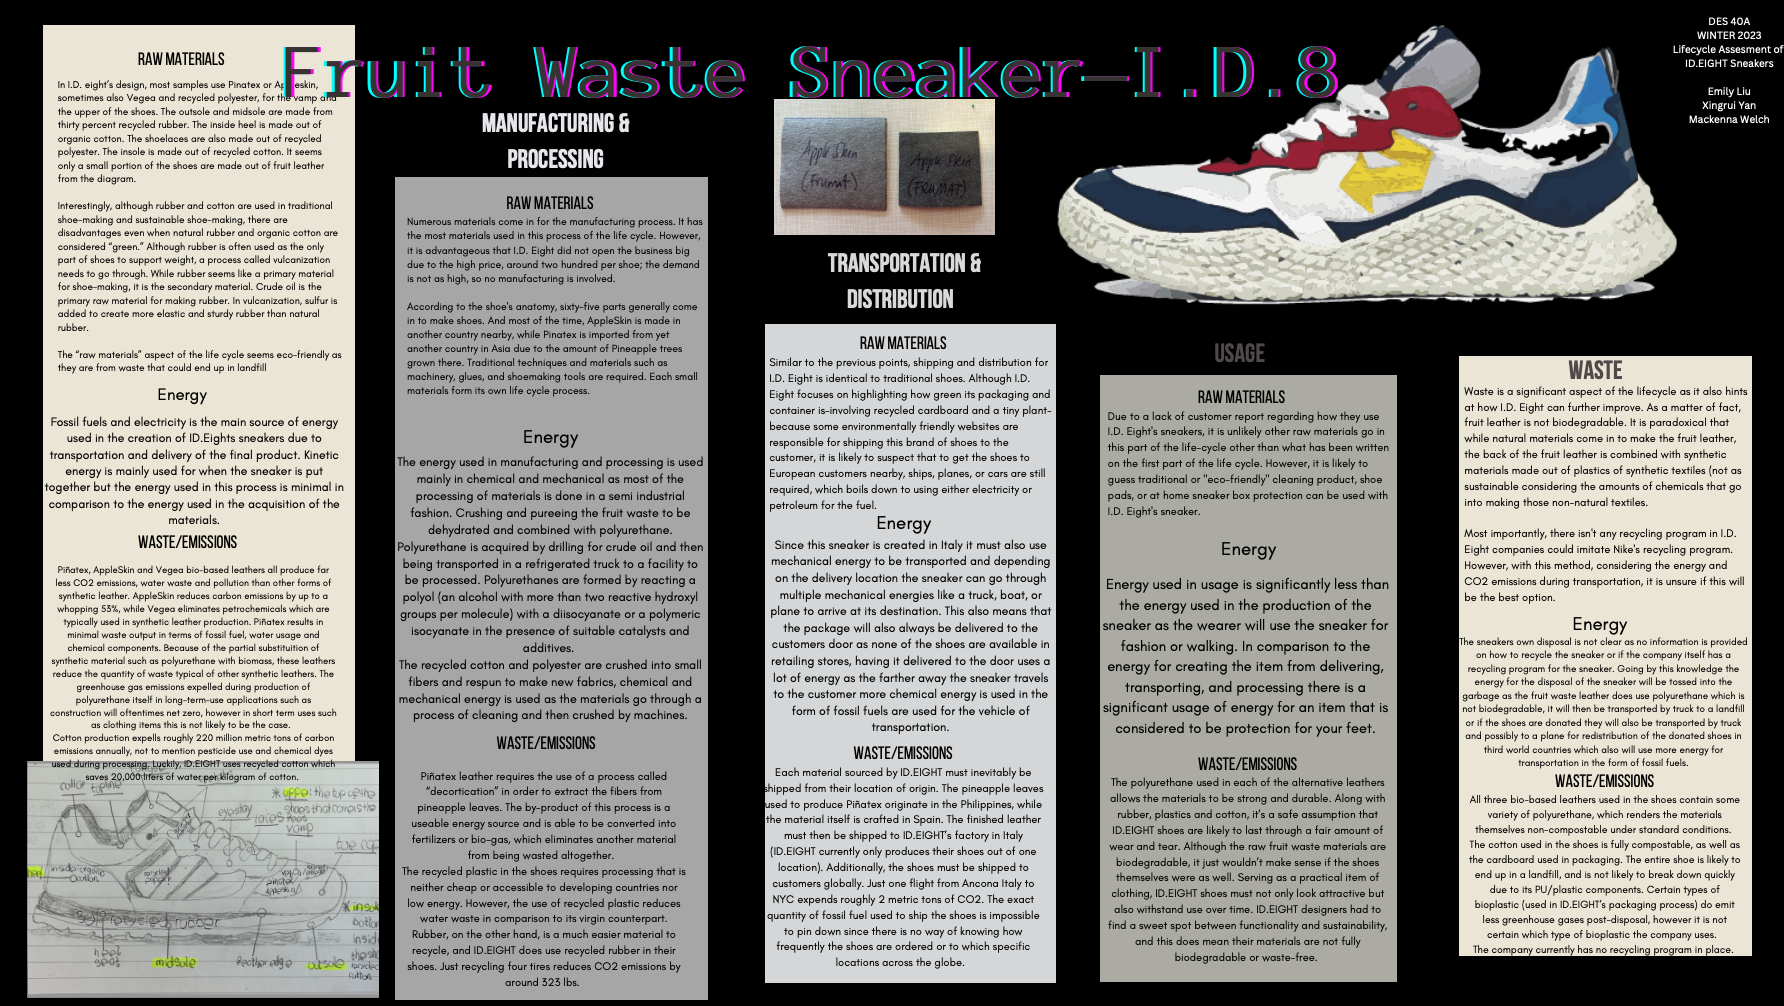 SneakerBranding  Custom shoes for businesses - Official Website